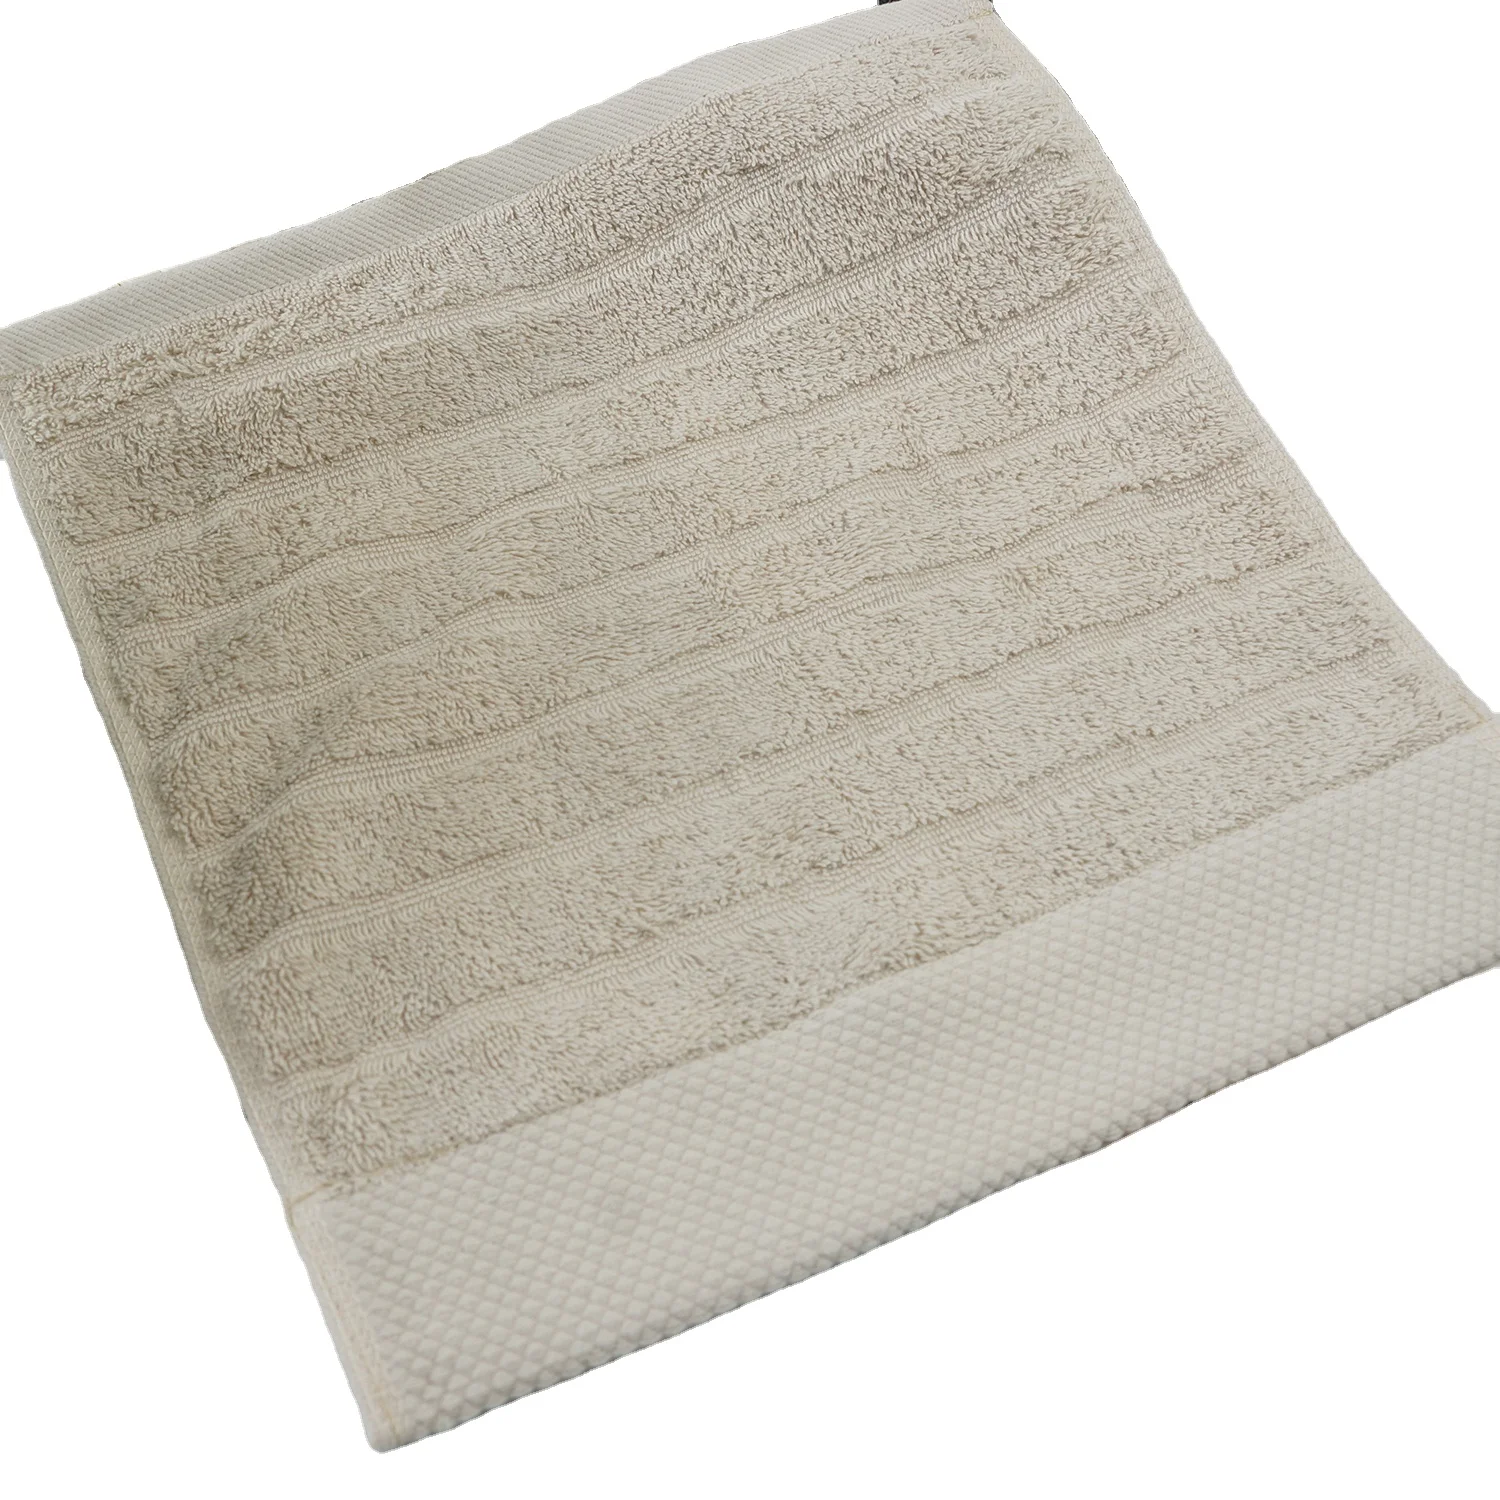 Wholesale face wash towel,100% cotton terry cloth towel for feminine towels